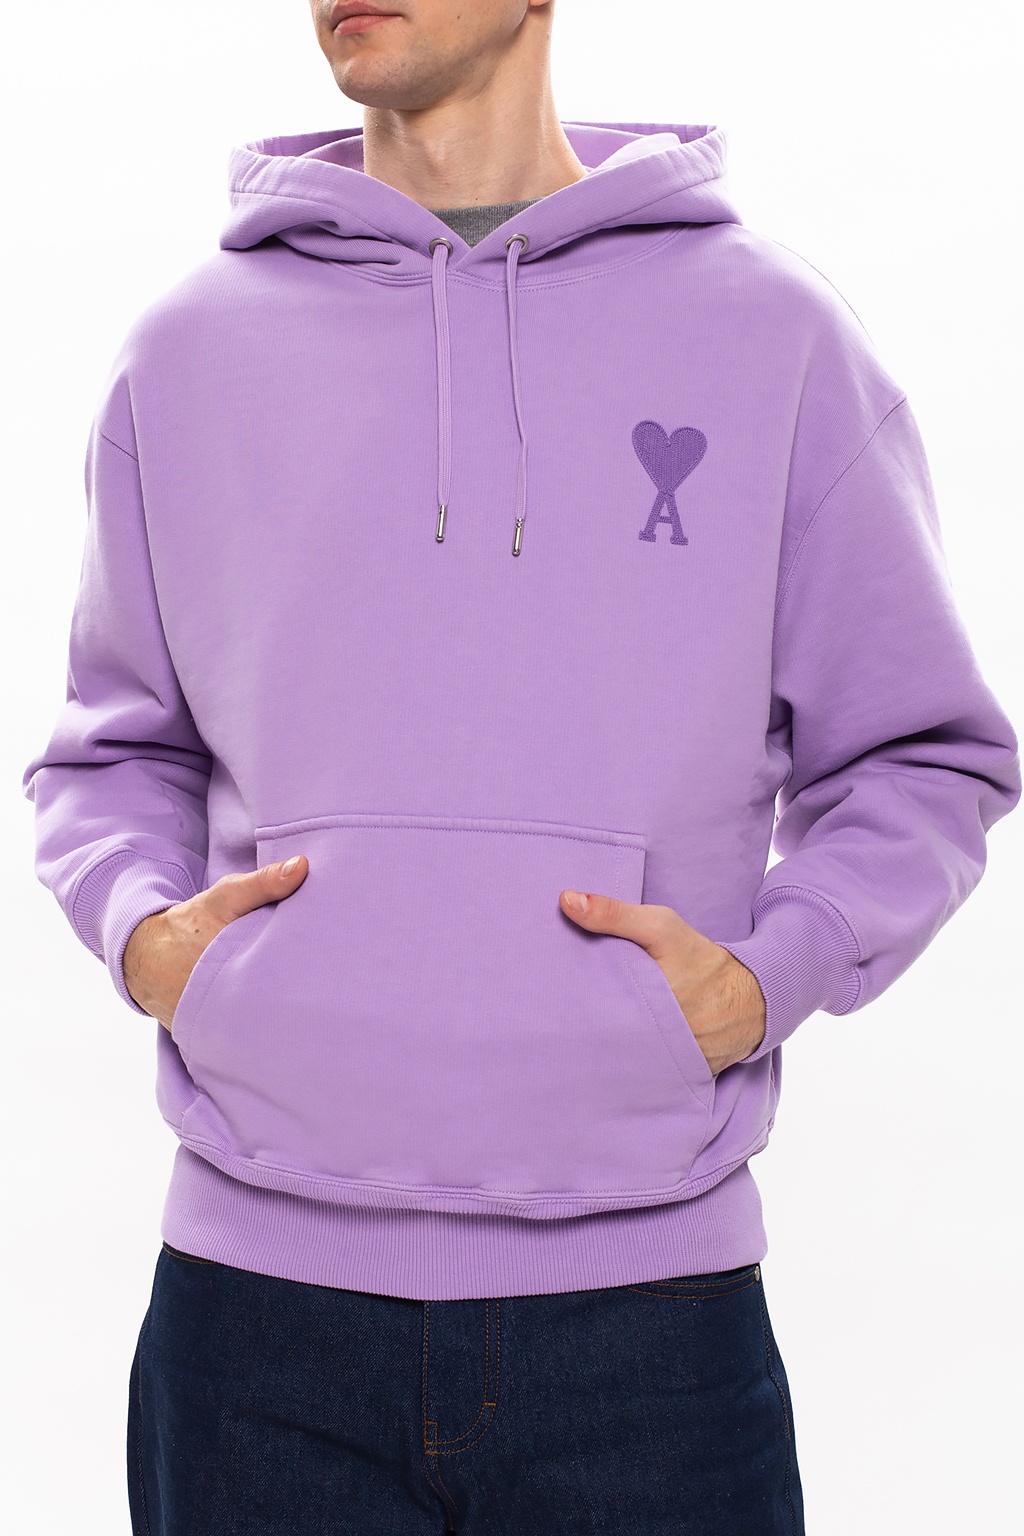 Louis vuitton purple unisex hoodie for men women lv luxury brand clothing  clothes outfit 171 hdlux